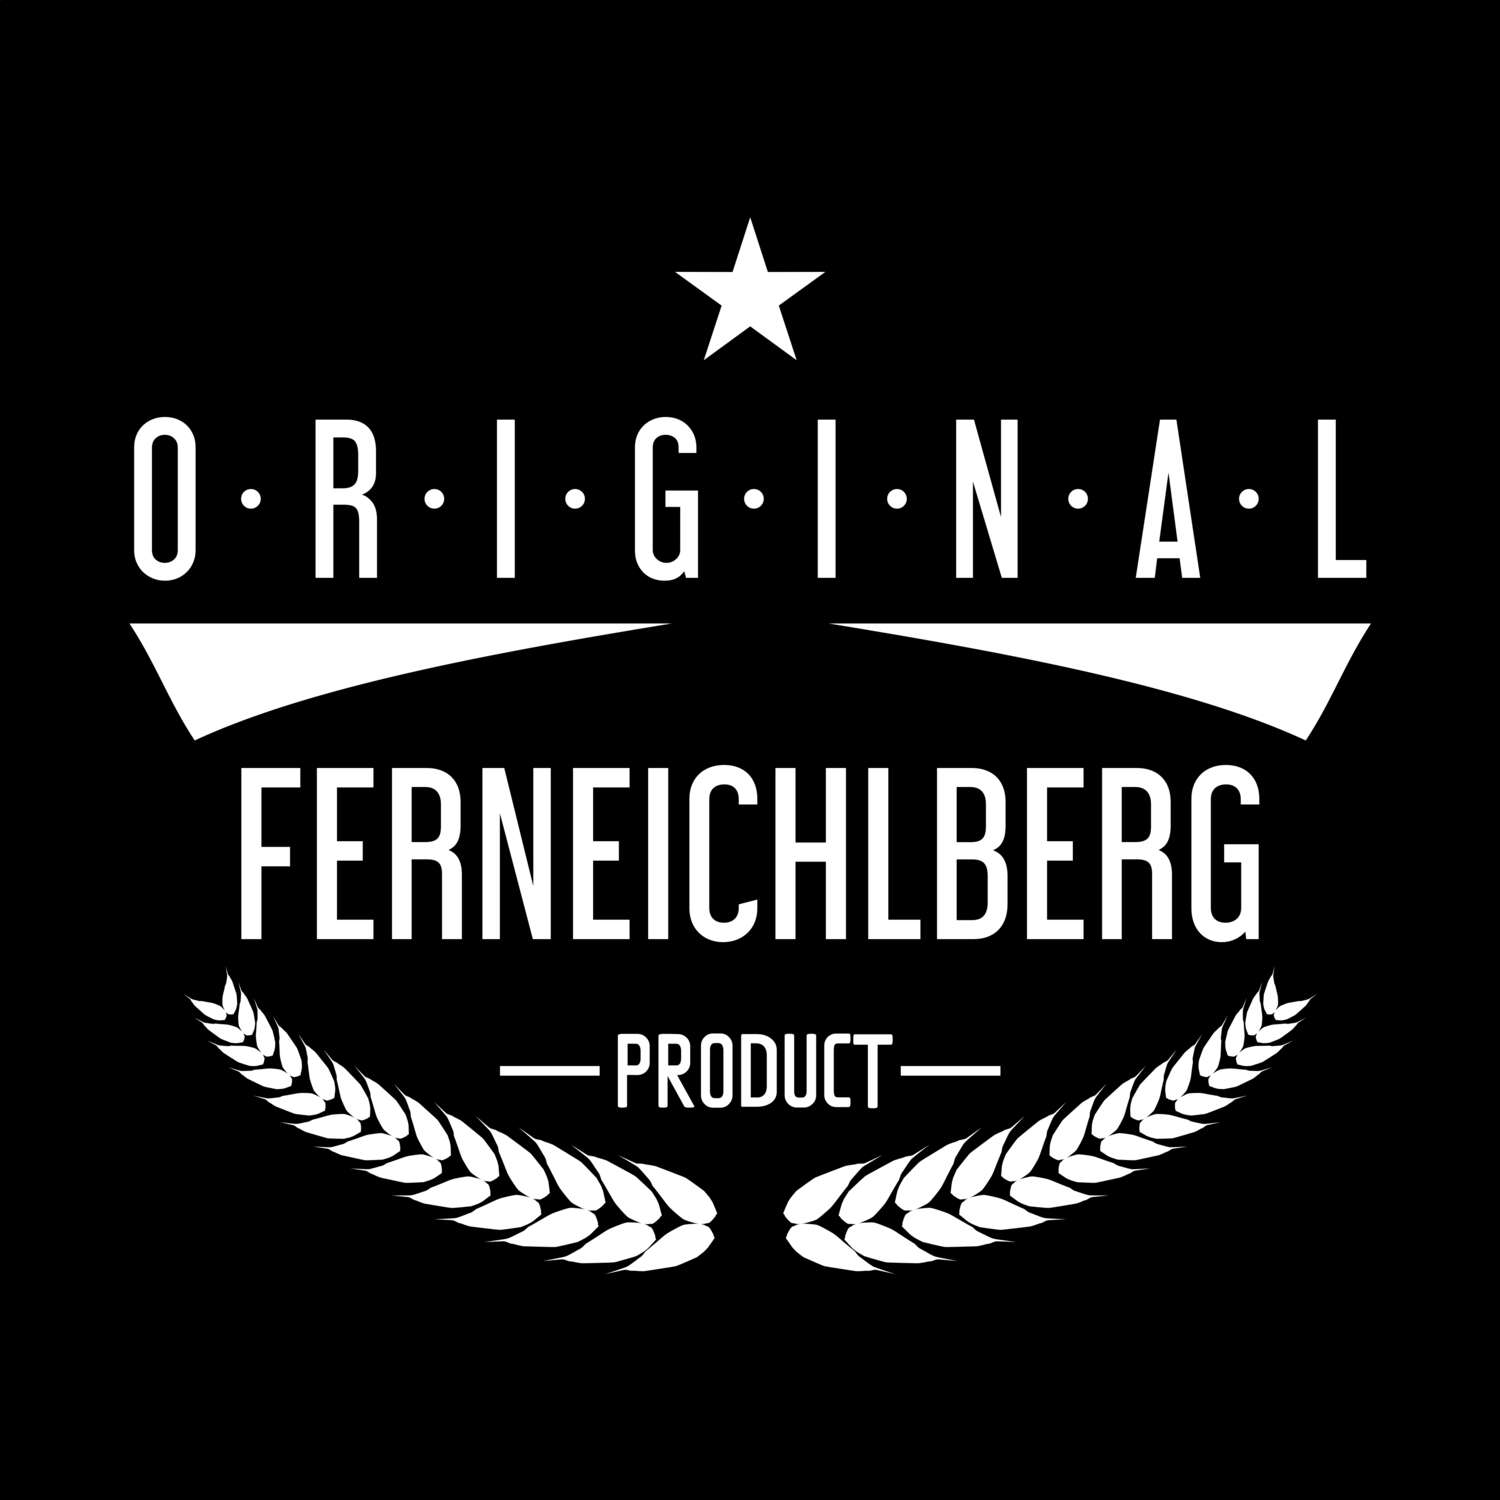 Ferneichlberg T-Shirt »Original Product«